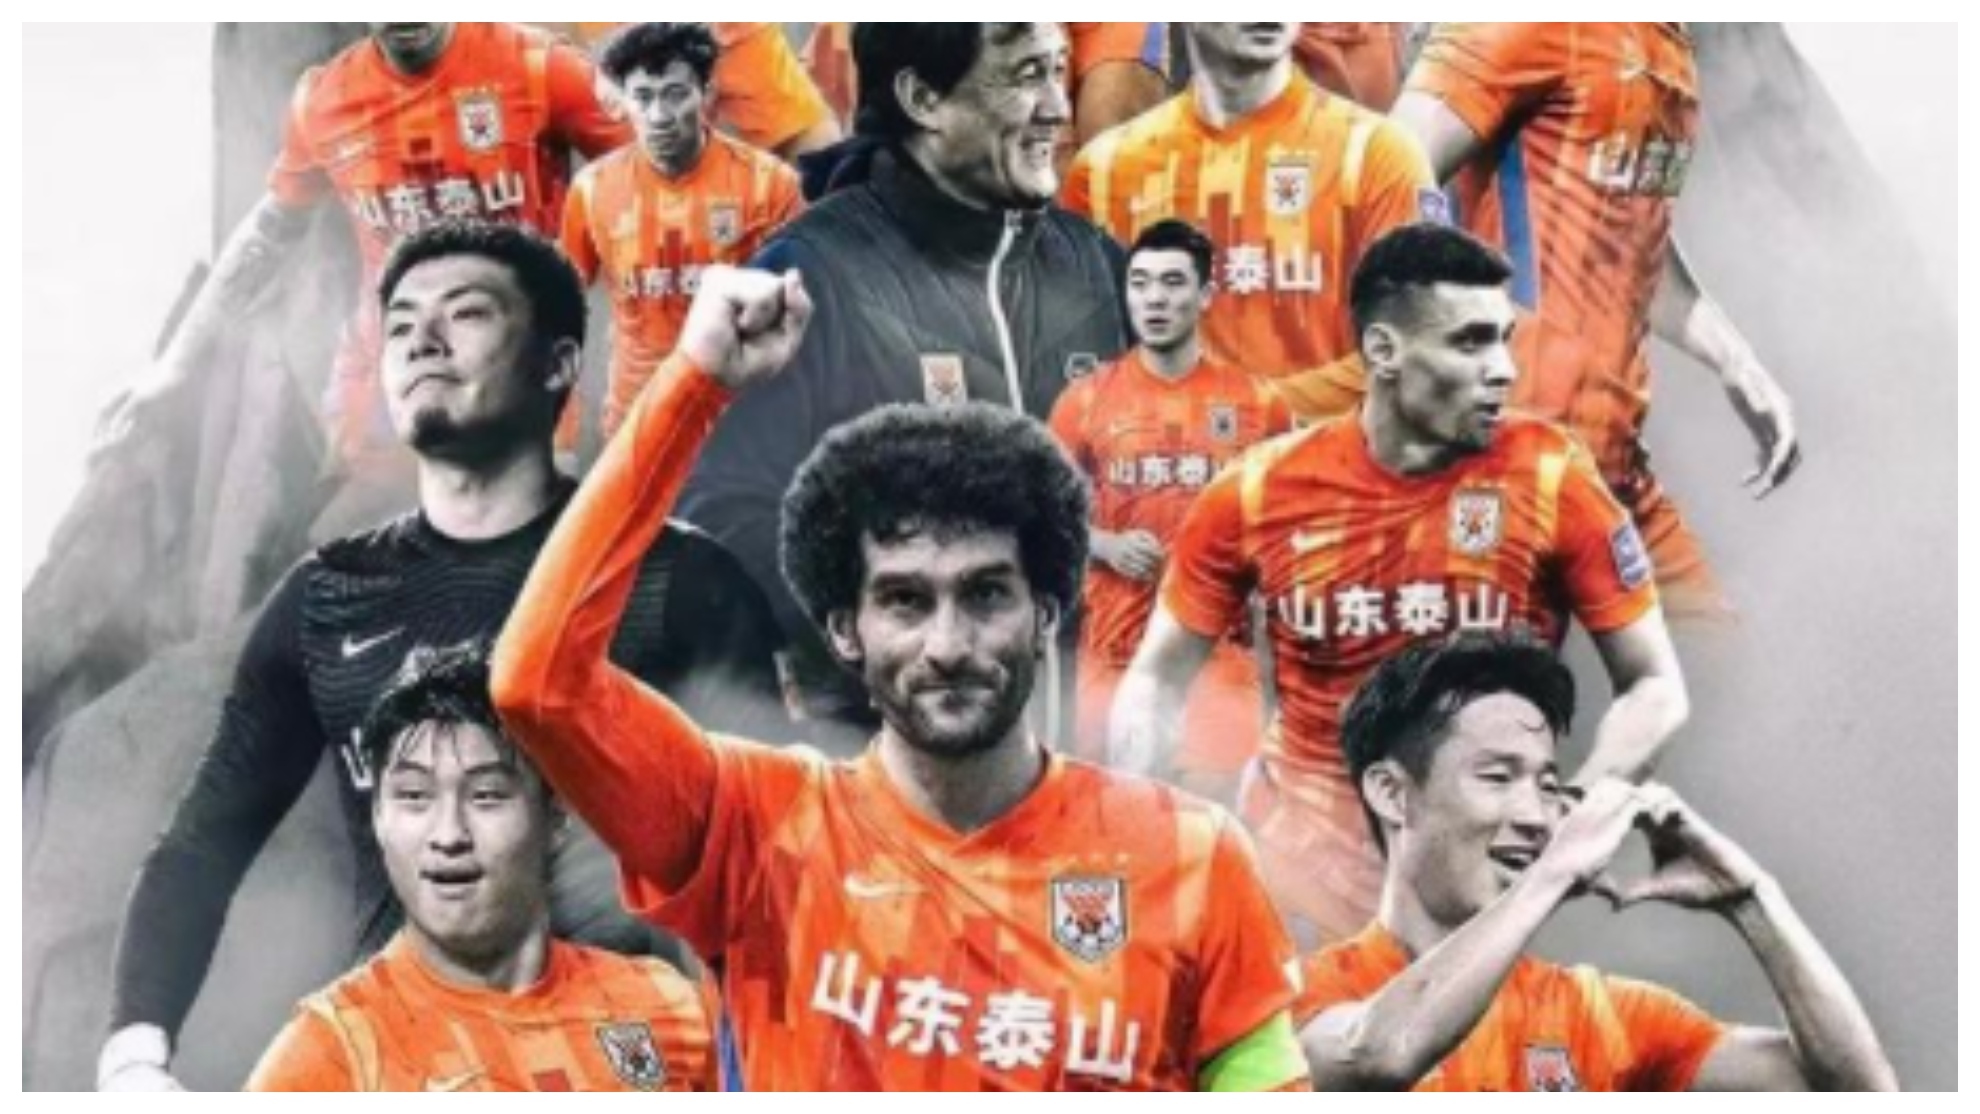 El Shandong Taishan de Fellaini conquista el doblete: Liga... y Copa